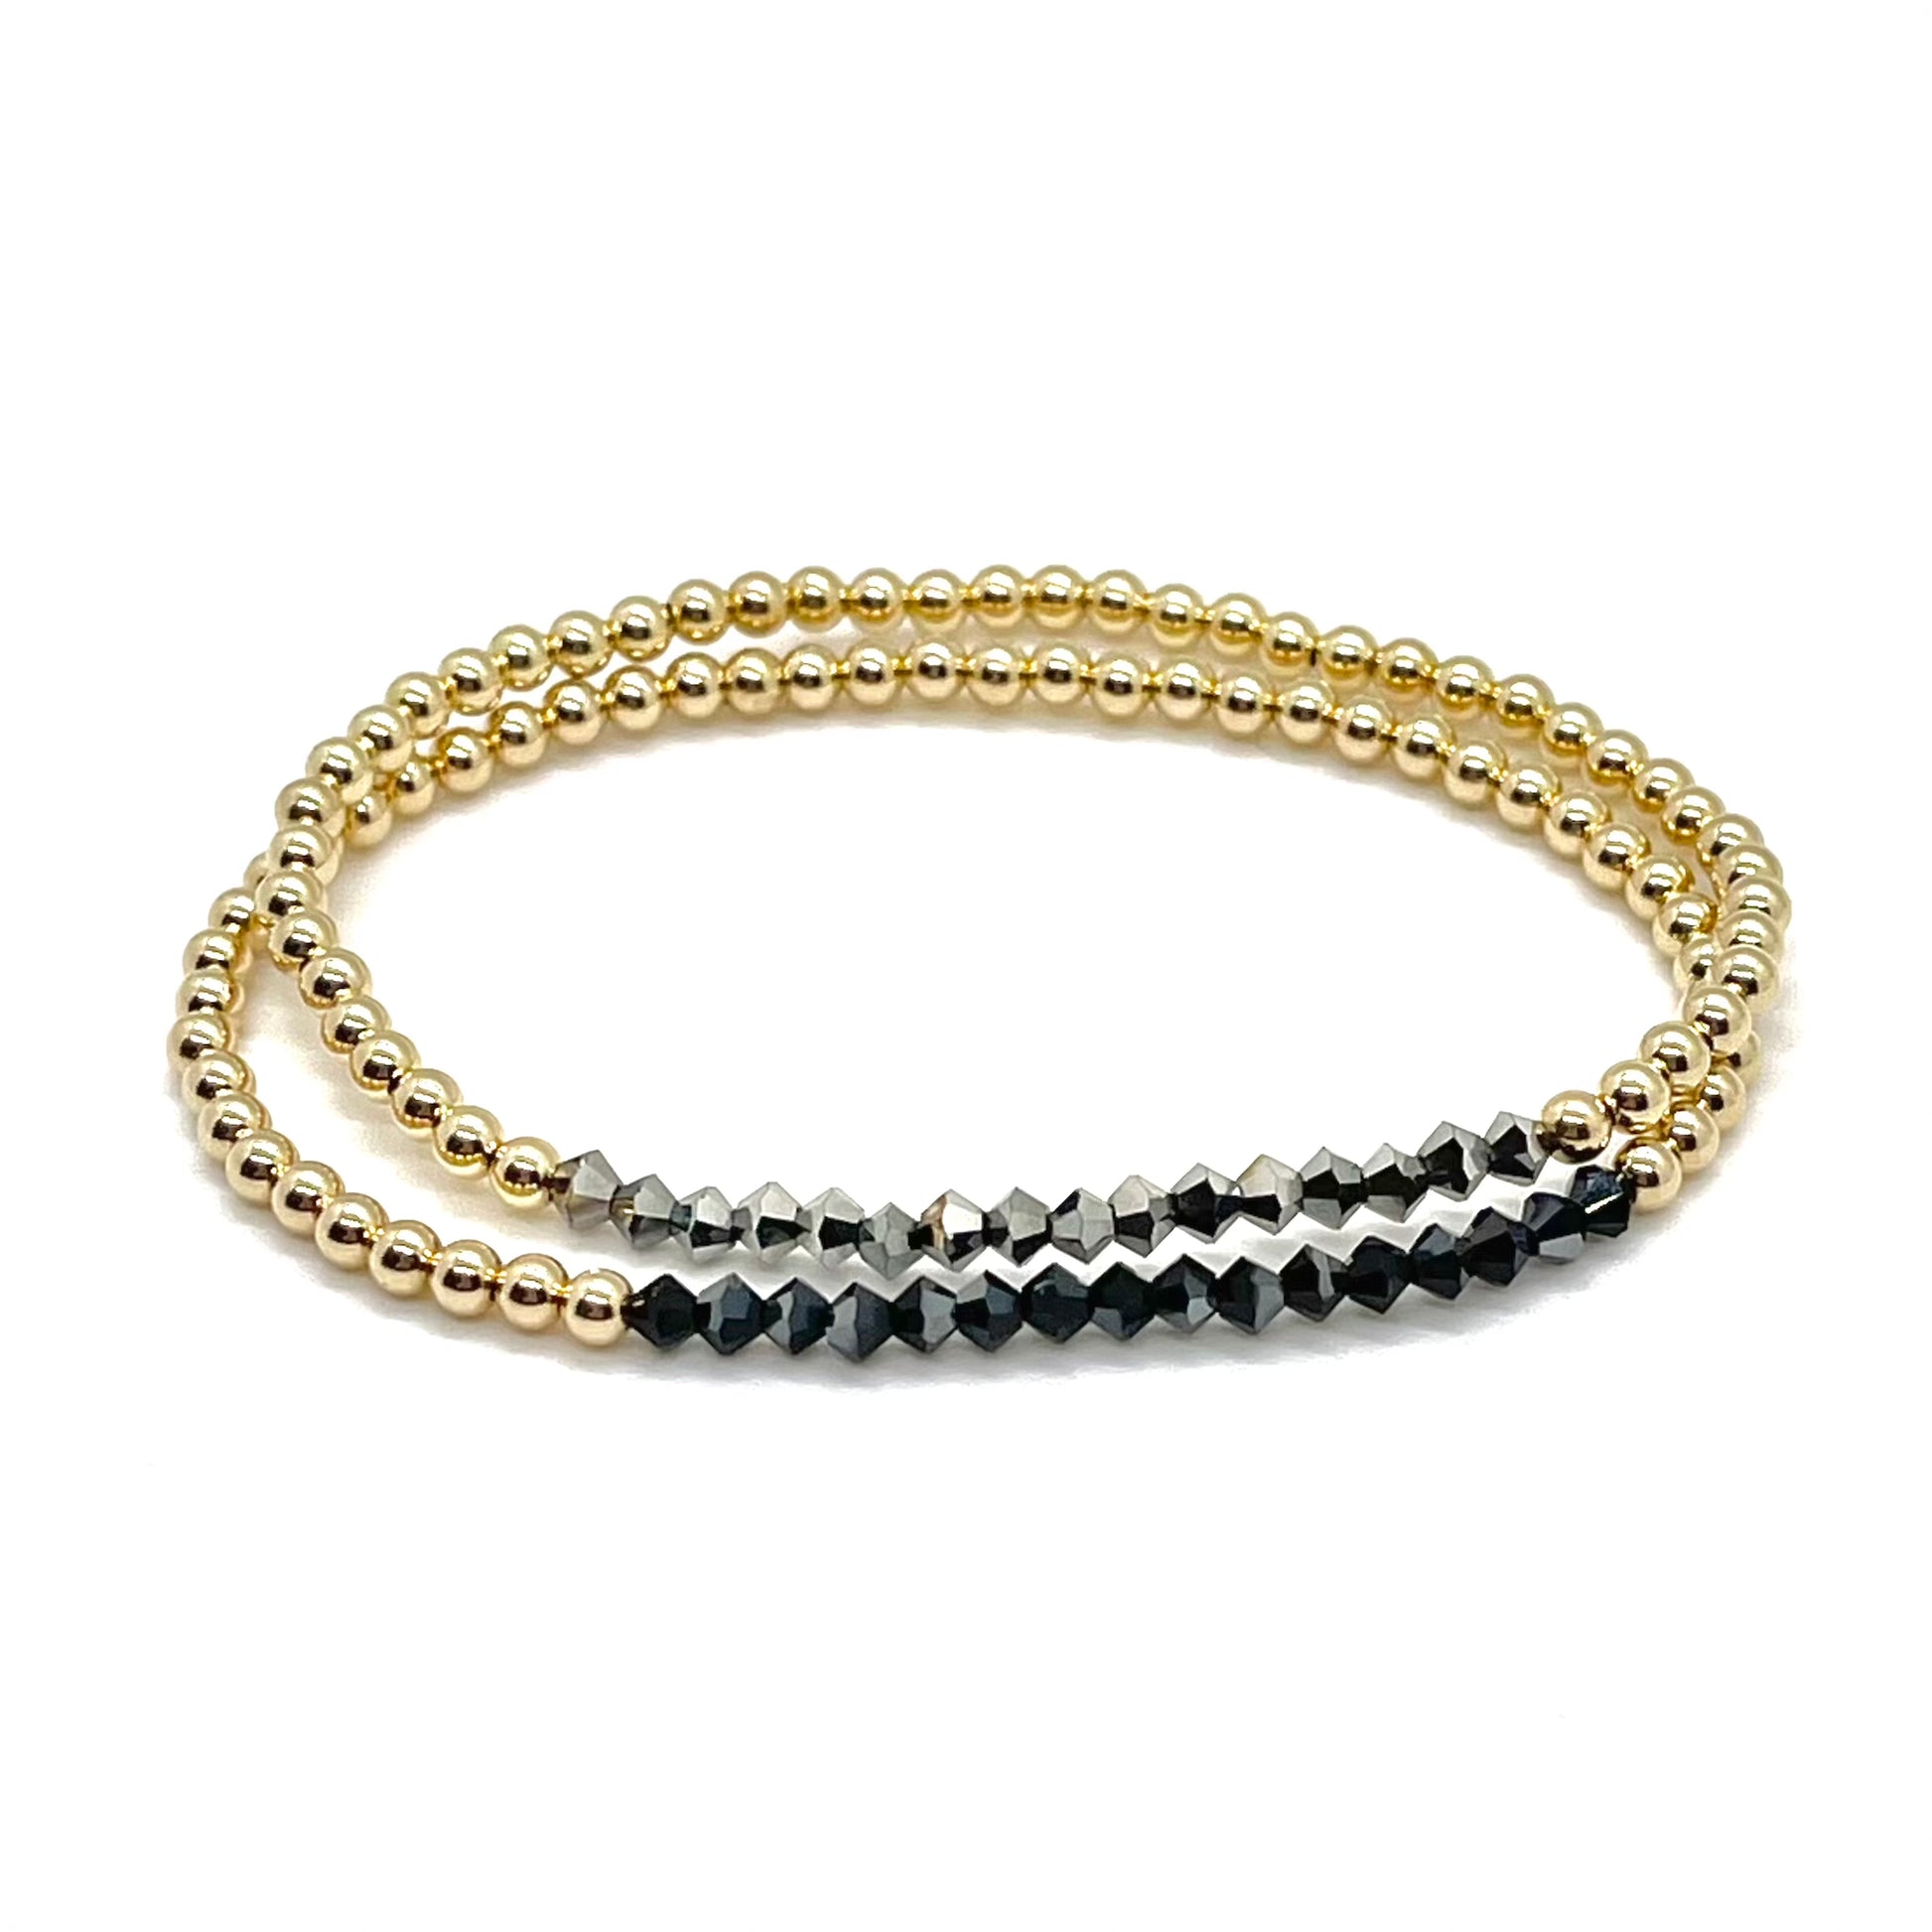 Gold bead bracelets wtih mini crystal diamond-shape beads in black and hematite on stretch cord.